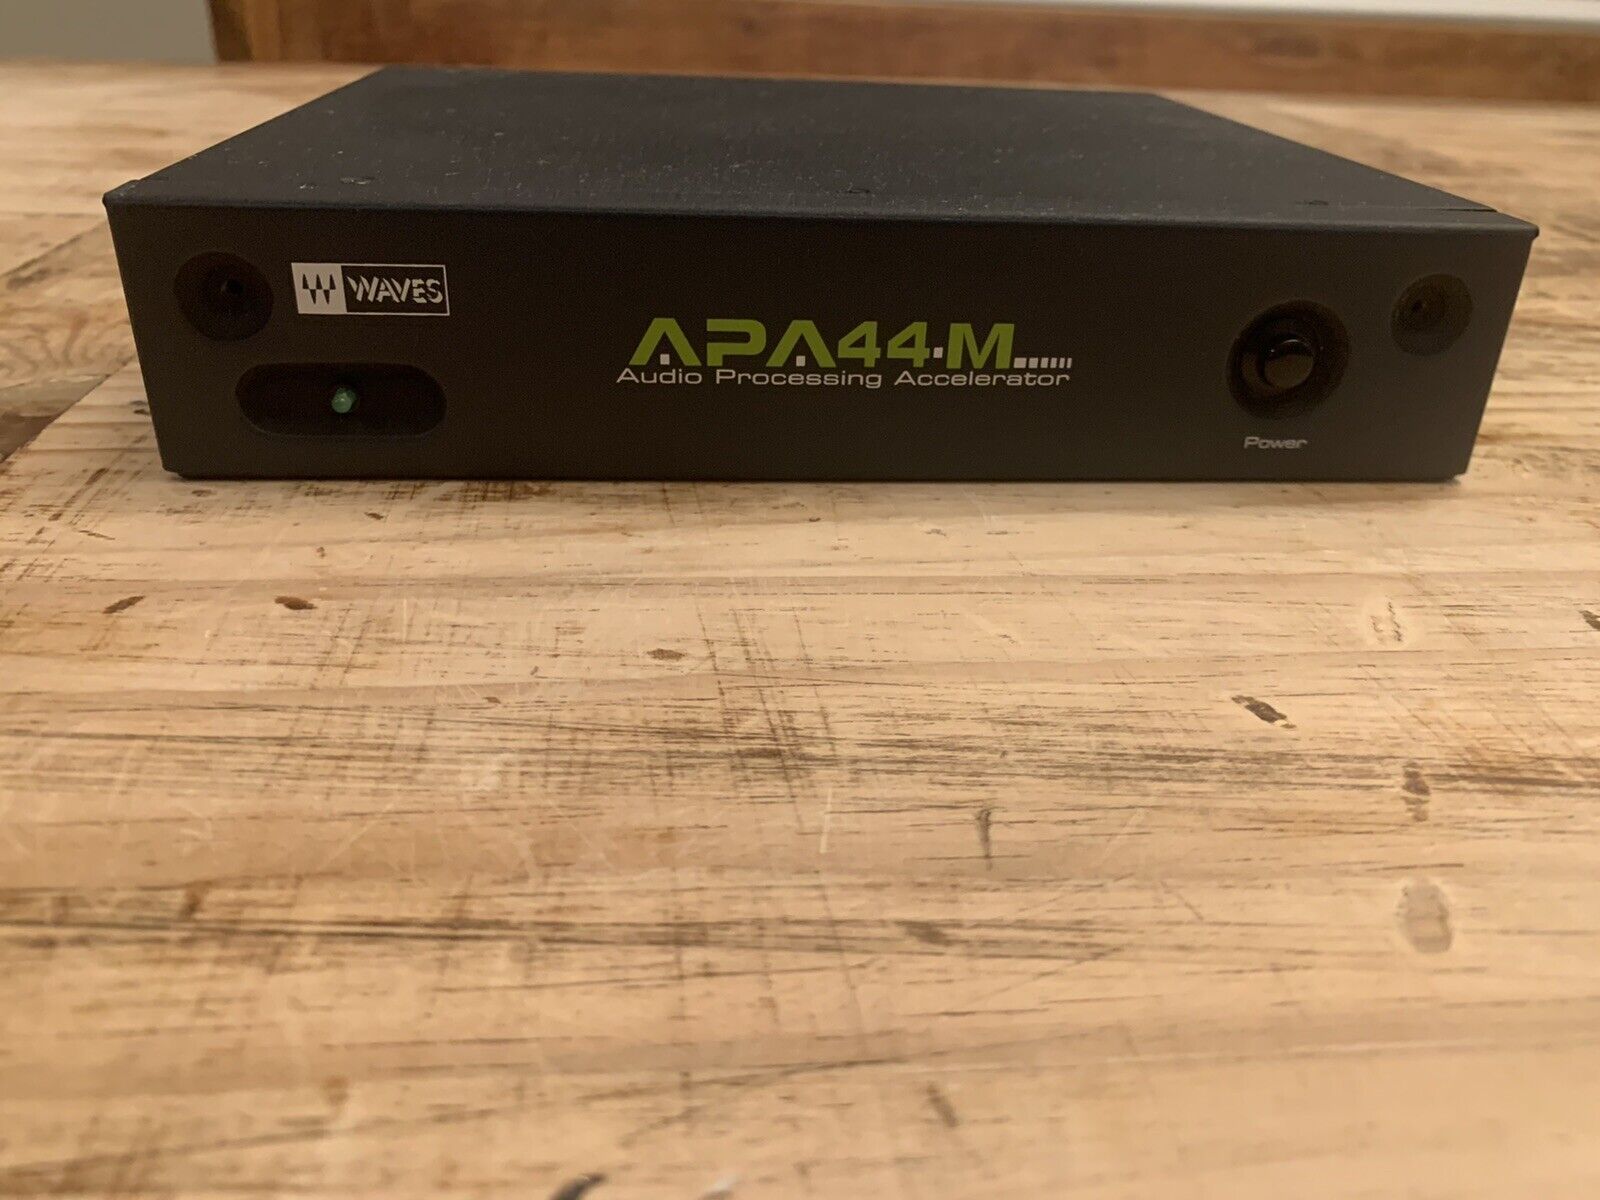 Waves APA44-M - Waves Audio Processing Accelerator